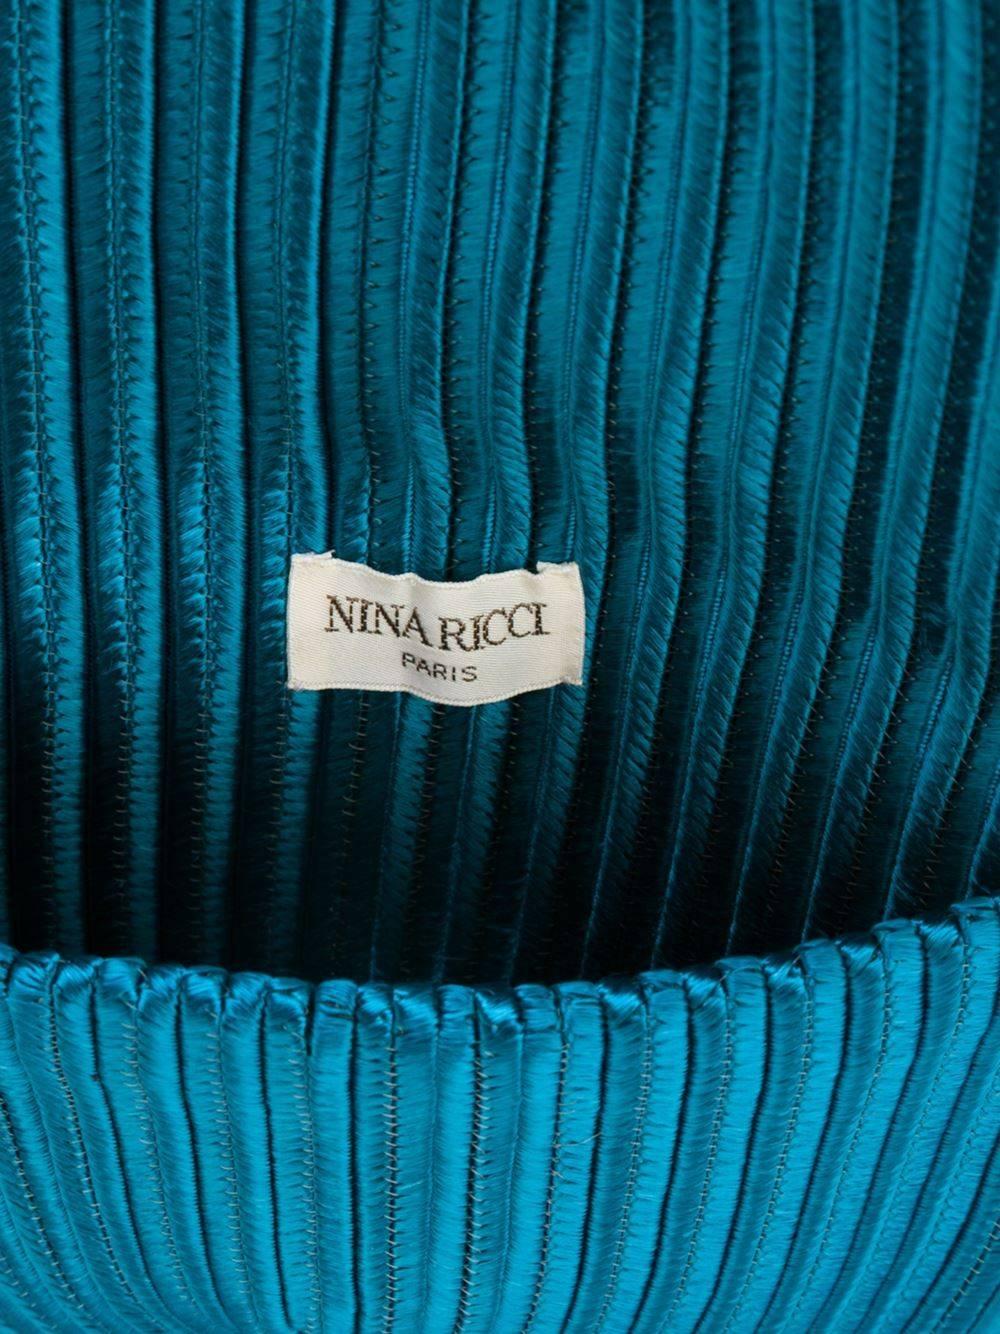 Women's Nina Ricci vintage 80s little turquoise bag